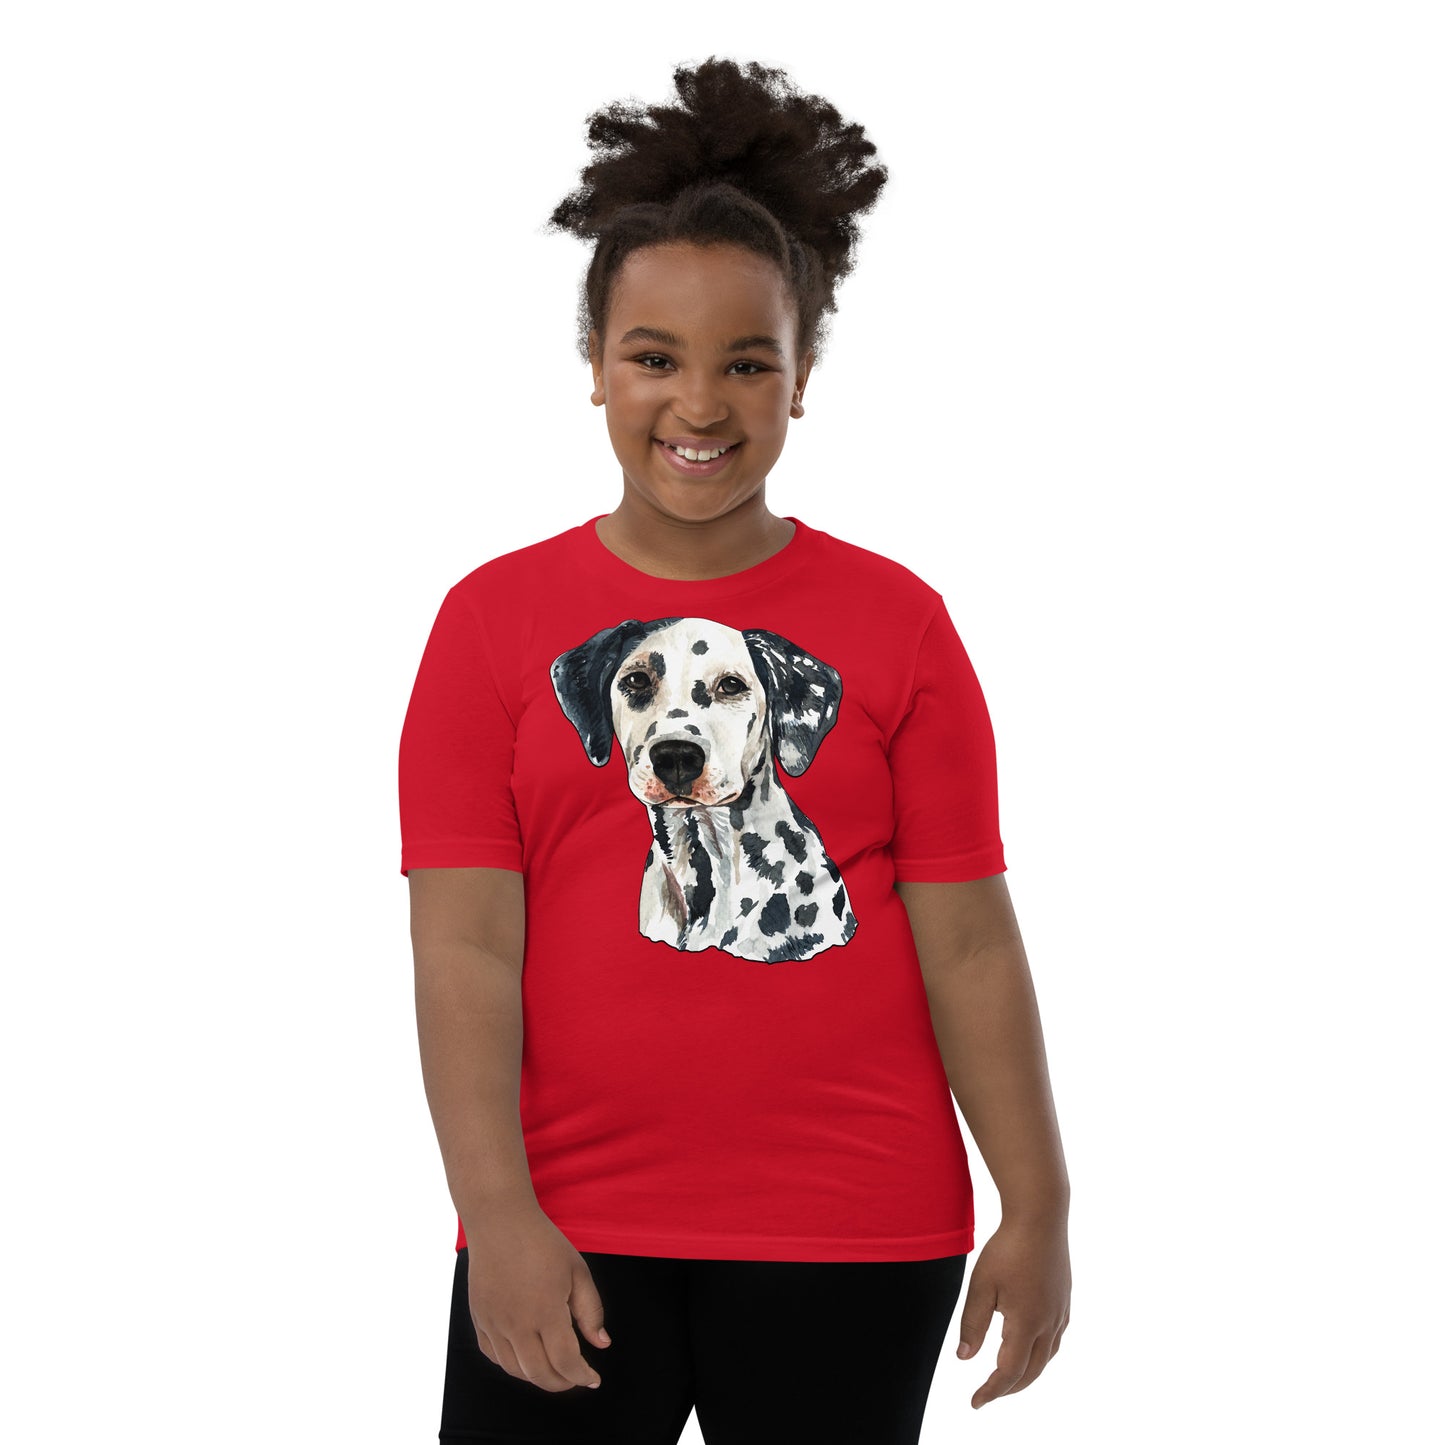 Cute Dalmatian Dog Portrait T-shirt, No. 0592